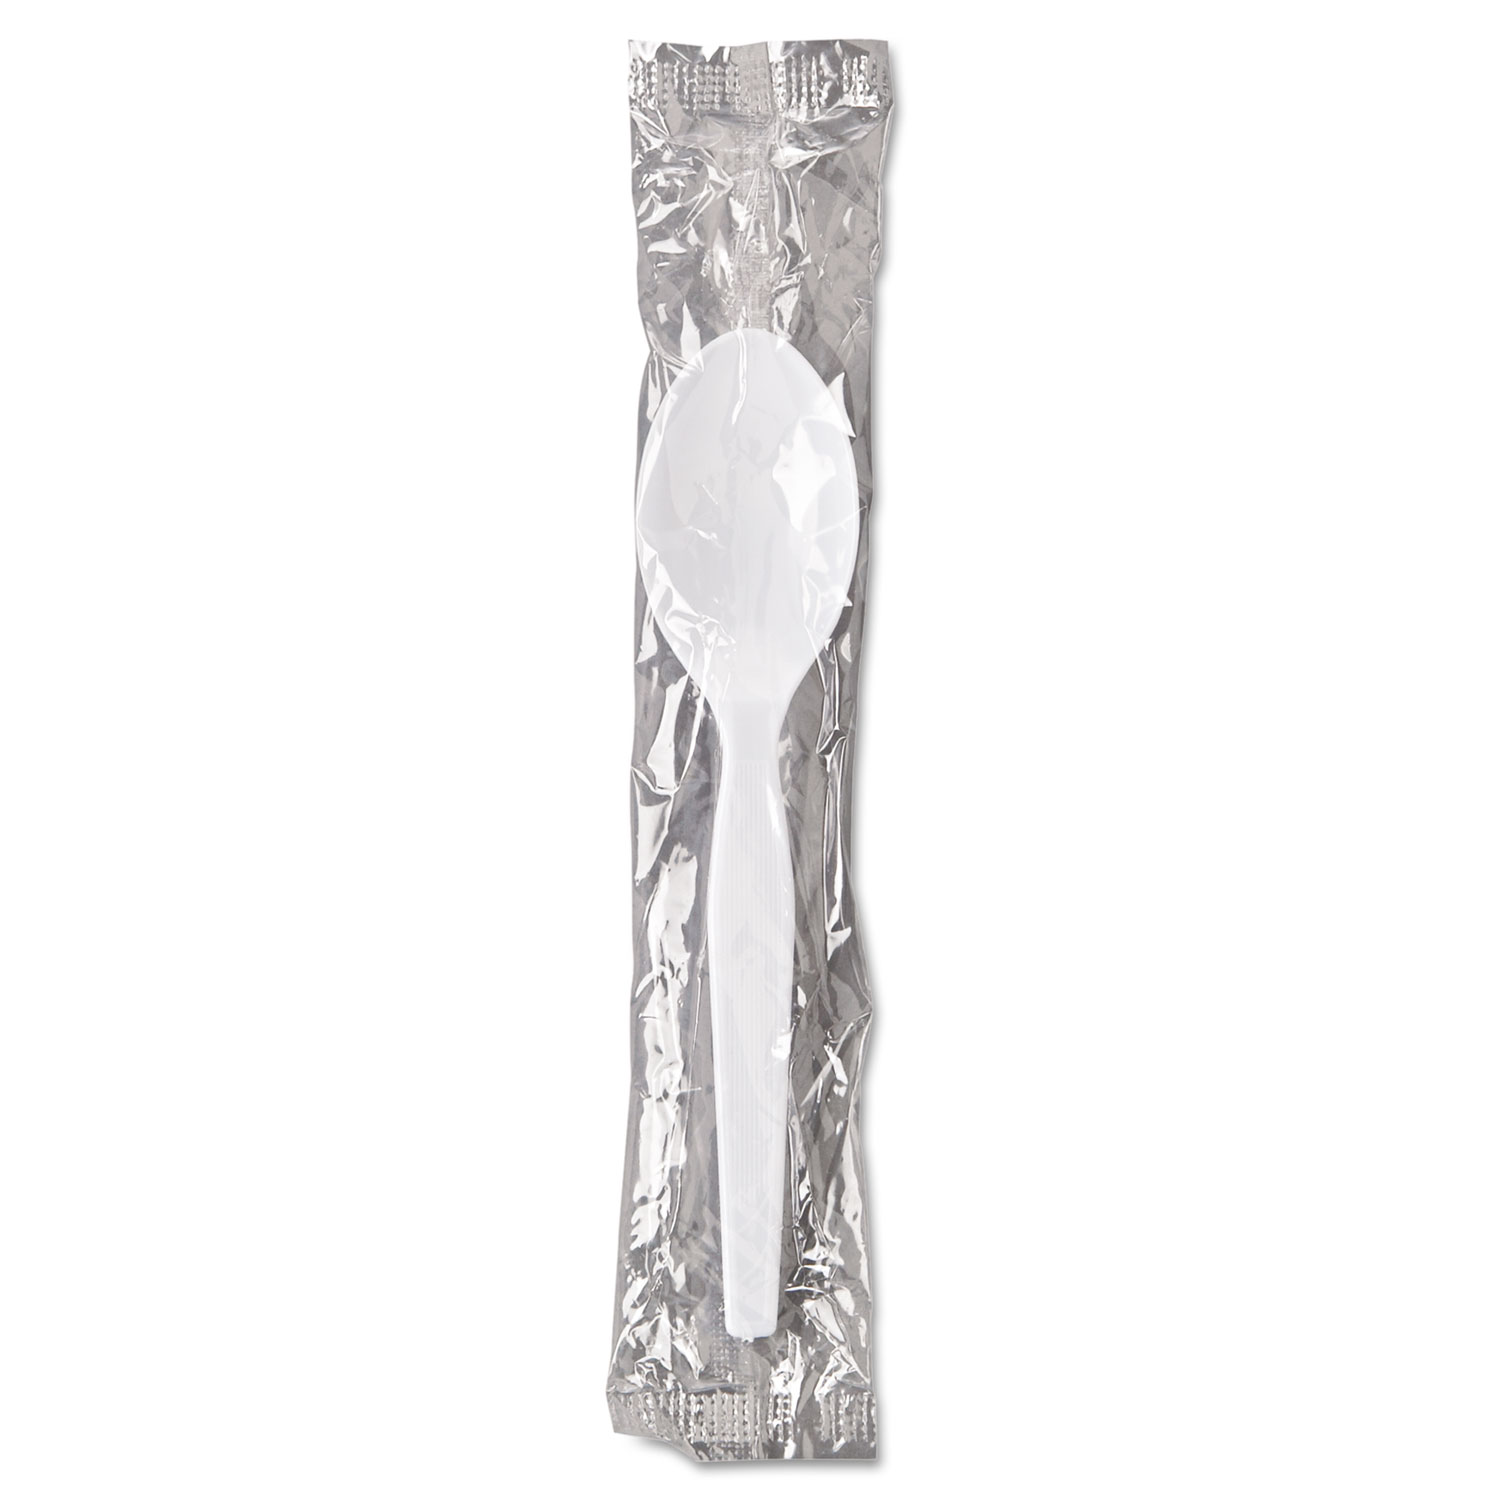 Individually Wrapped Polystyrene Cutlery, Teaspoons, White, 1000/Carton